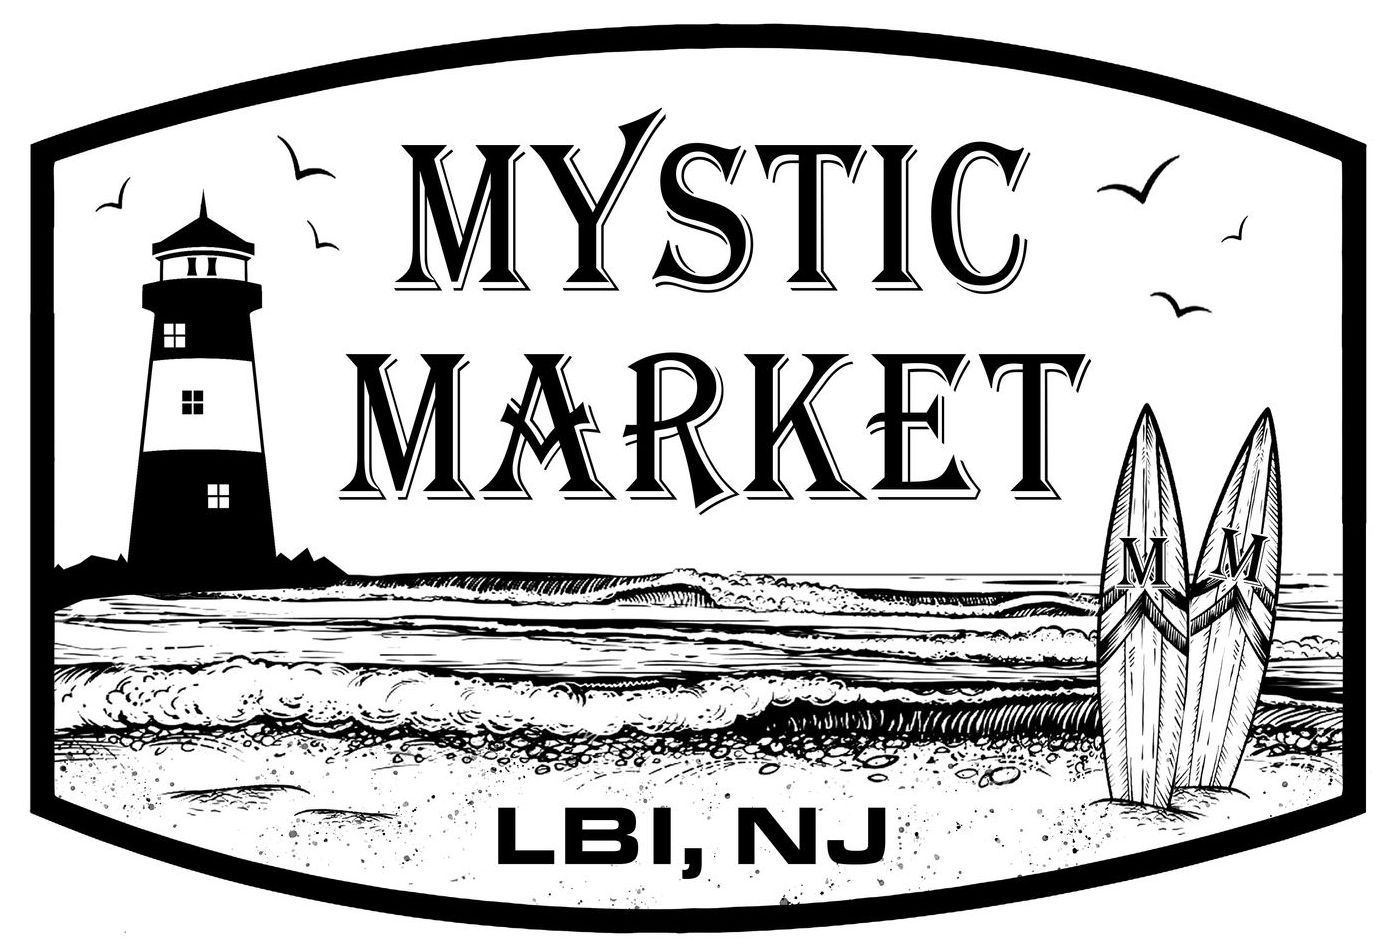 Mystic Meat & Seafood Market